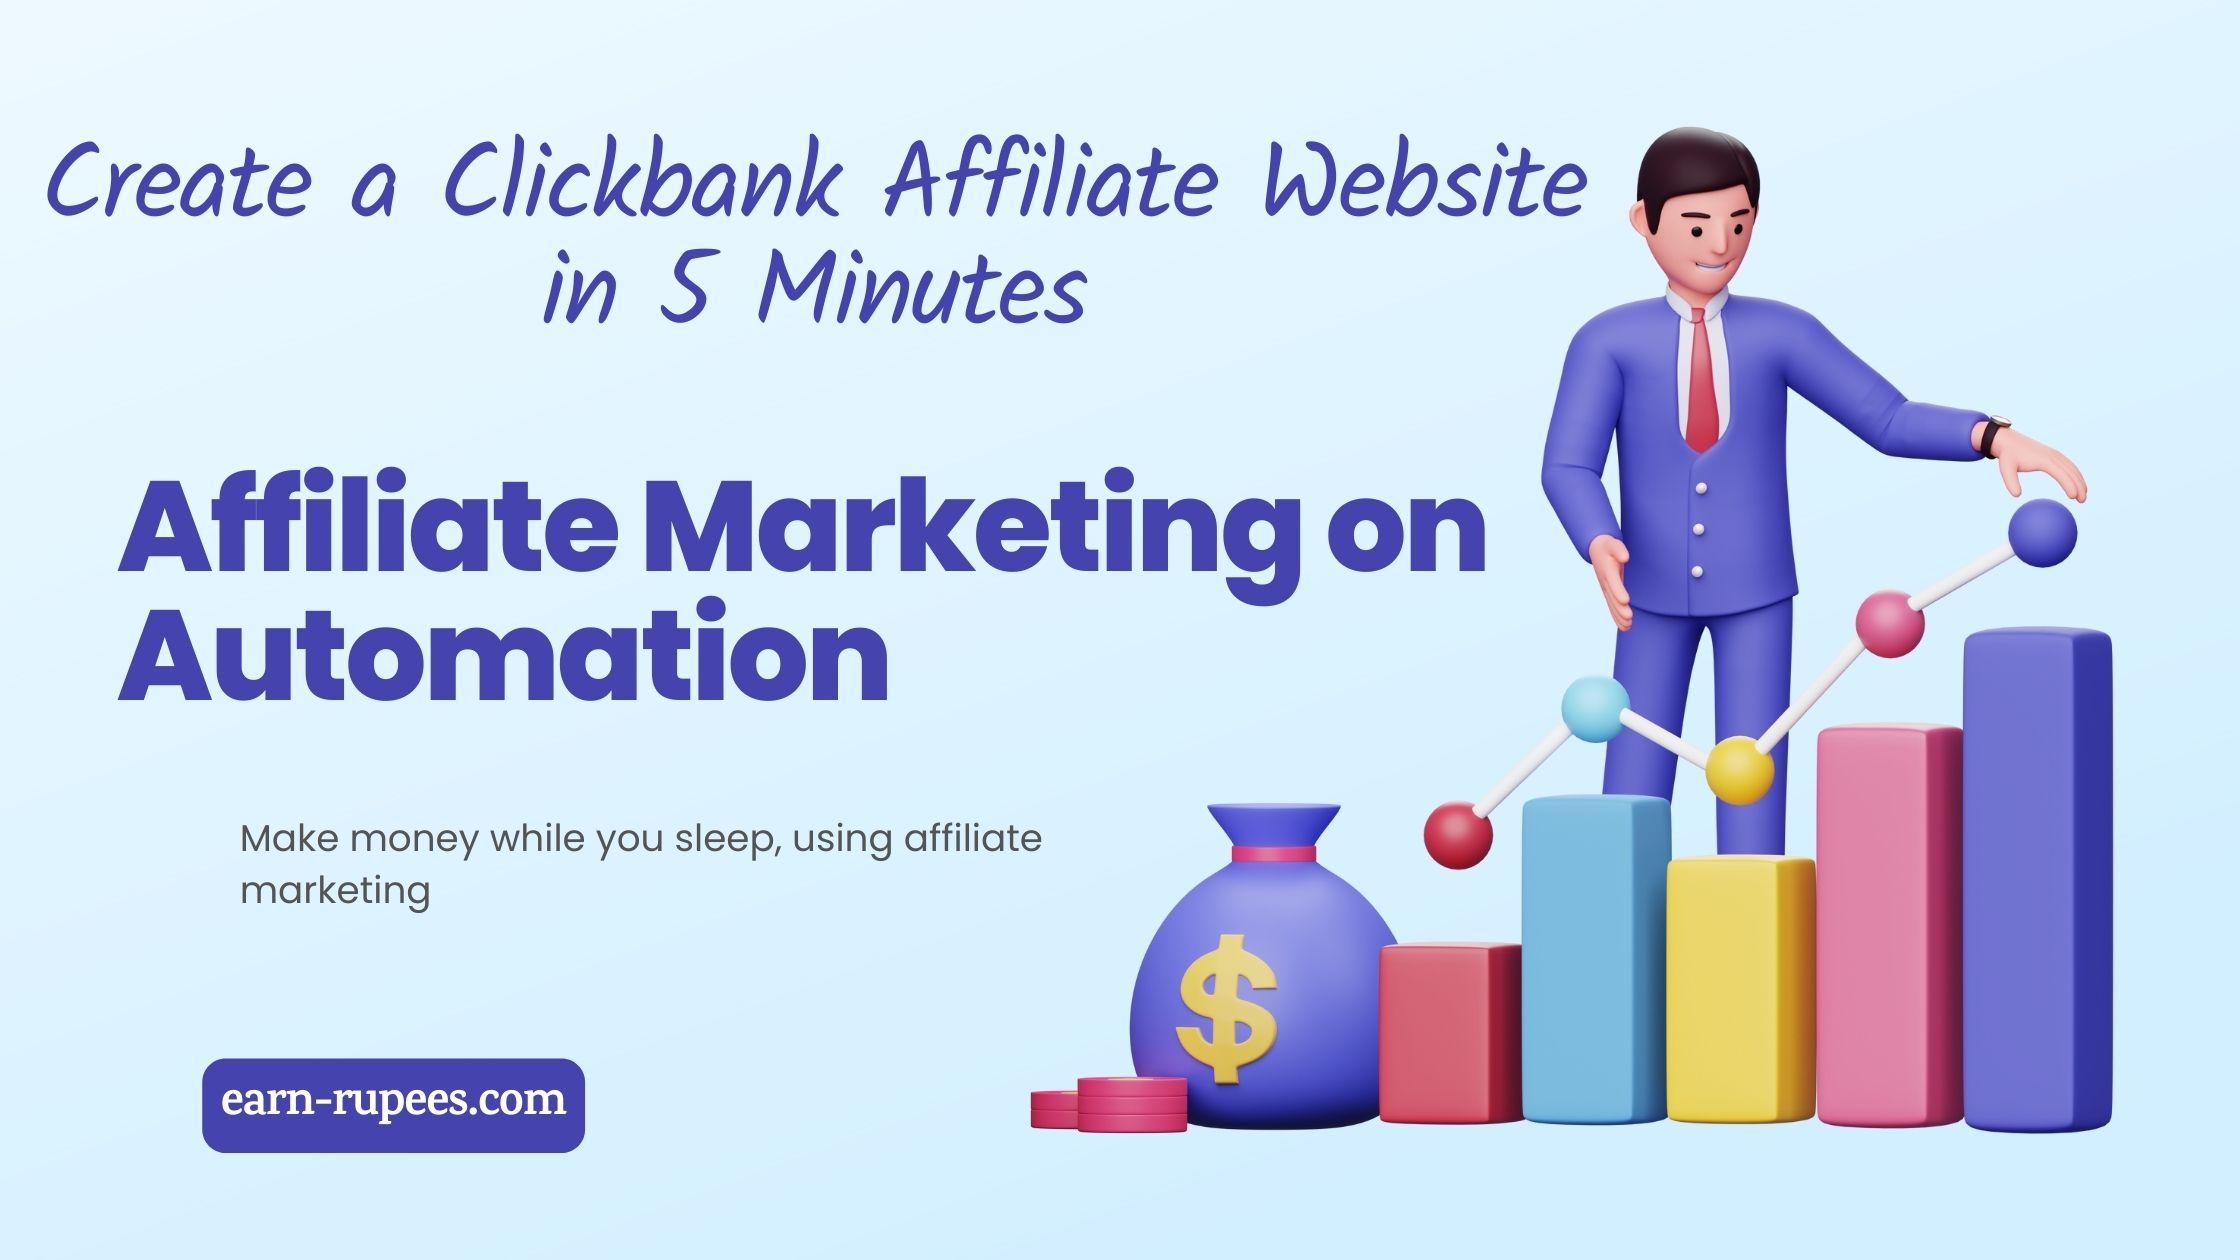 affiliate marketing using clickbank